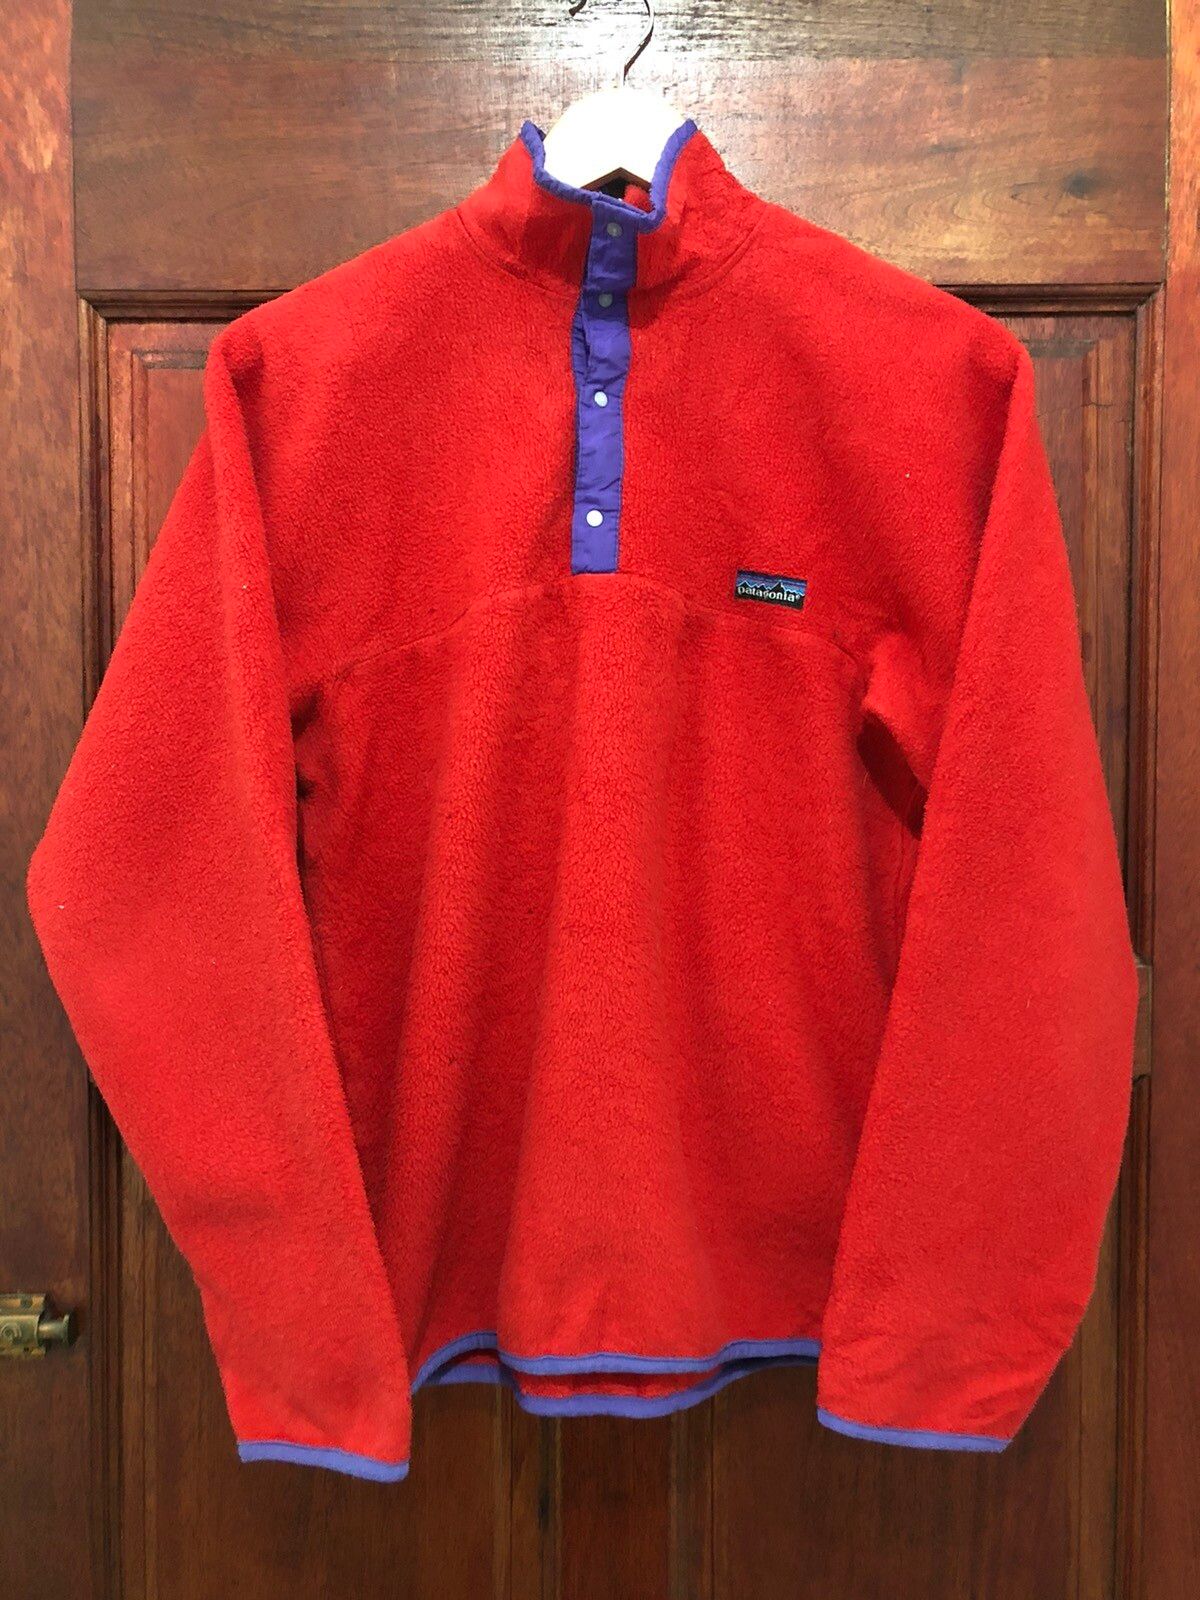 Vintage 90s Patagonia Synchilla Fleece Jacket - 1